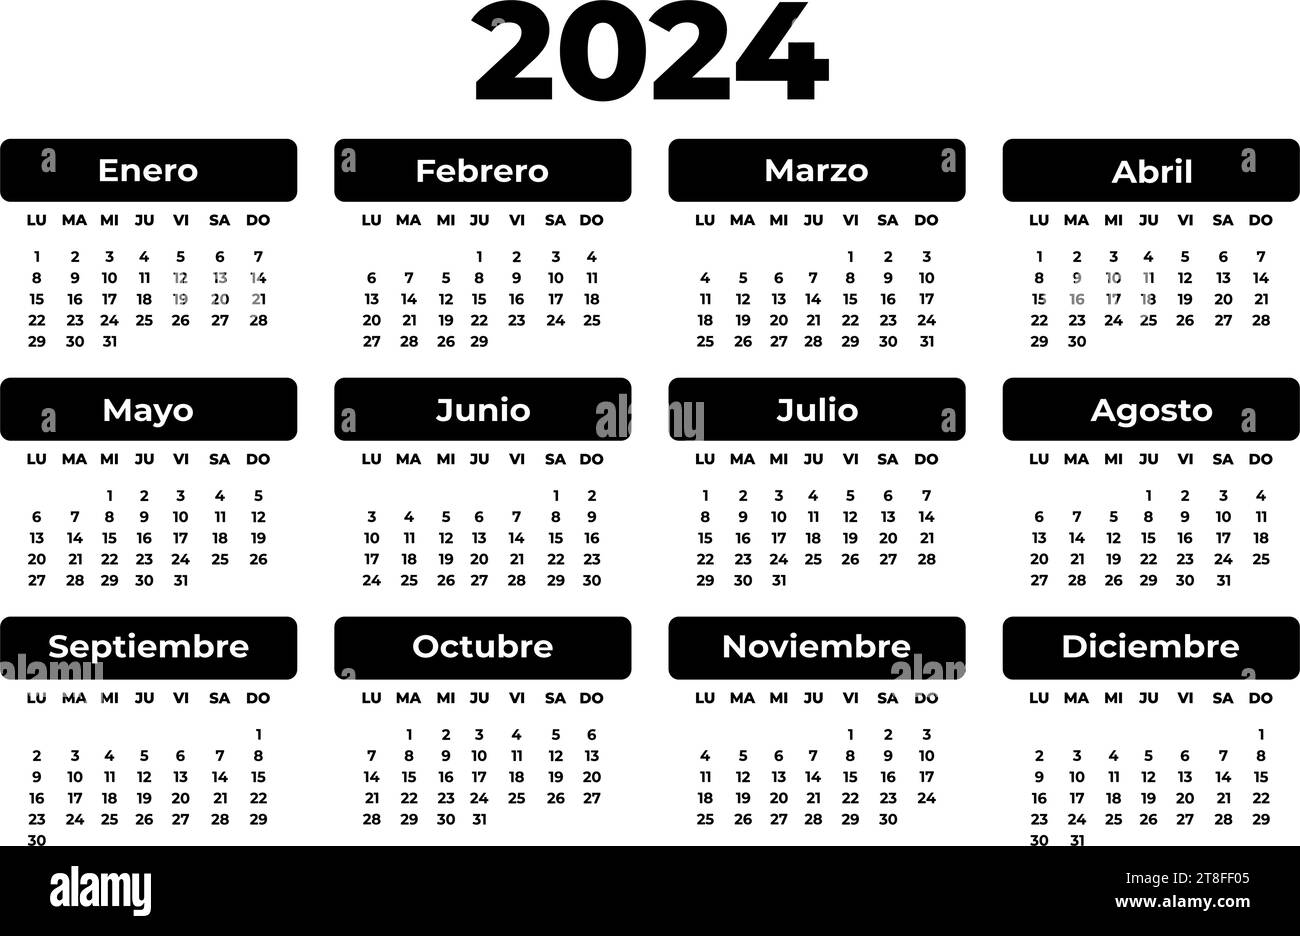 Calendario 2024 Immagini Vettoriali Stock - Alamy